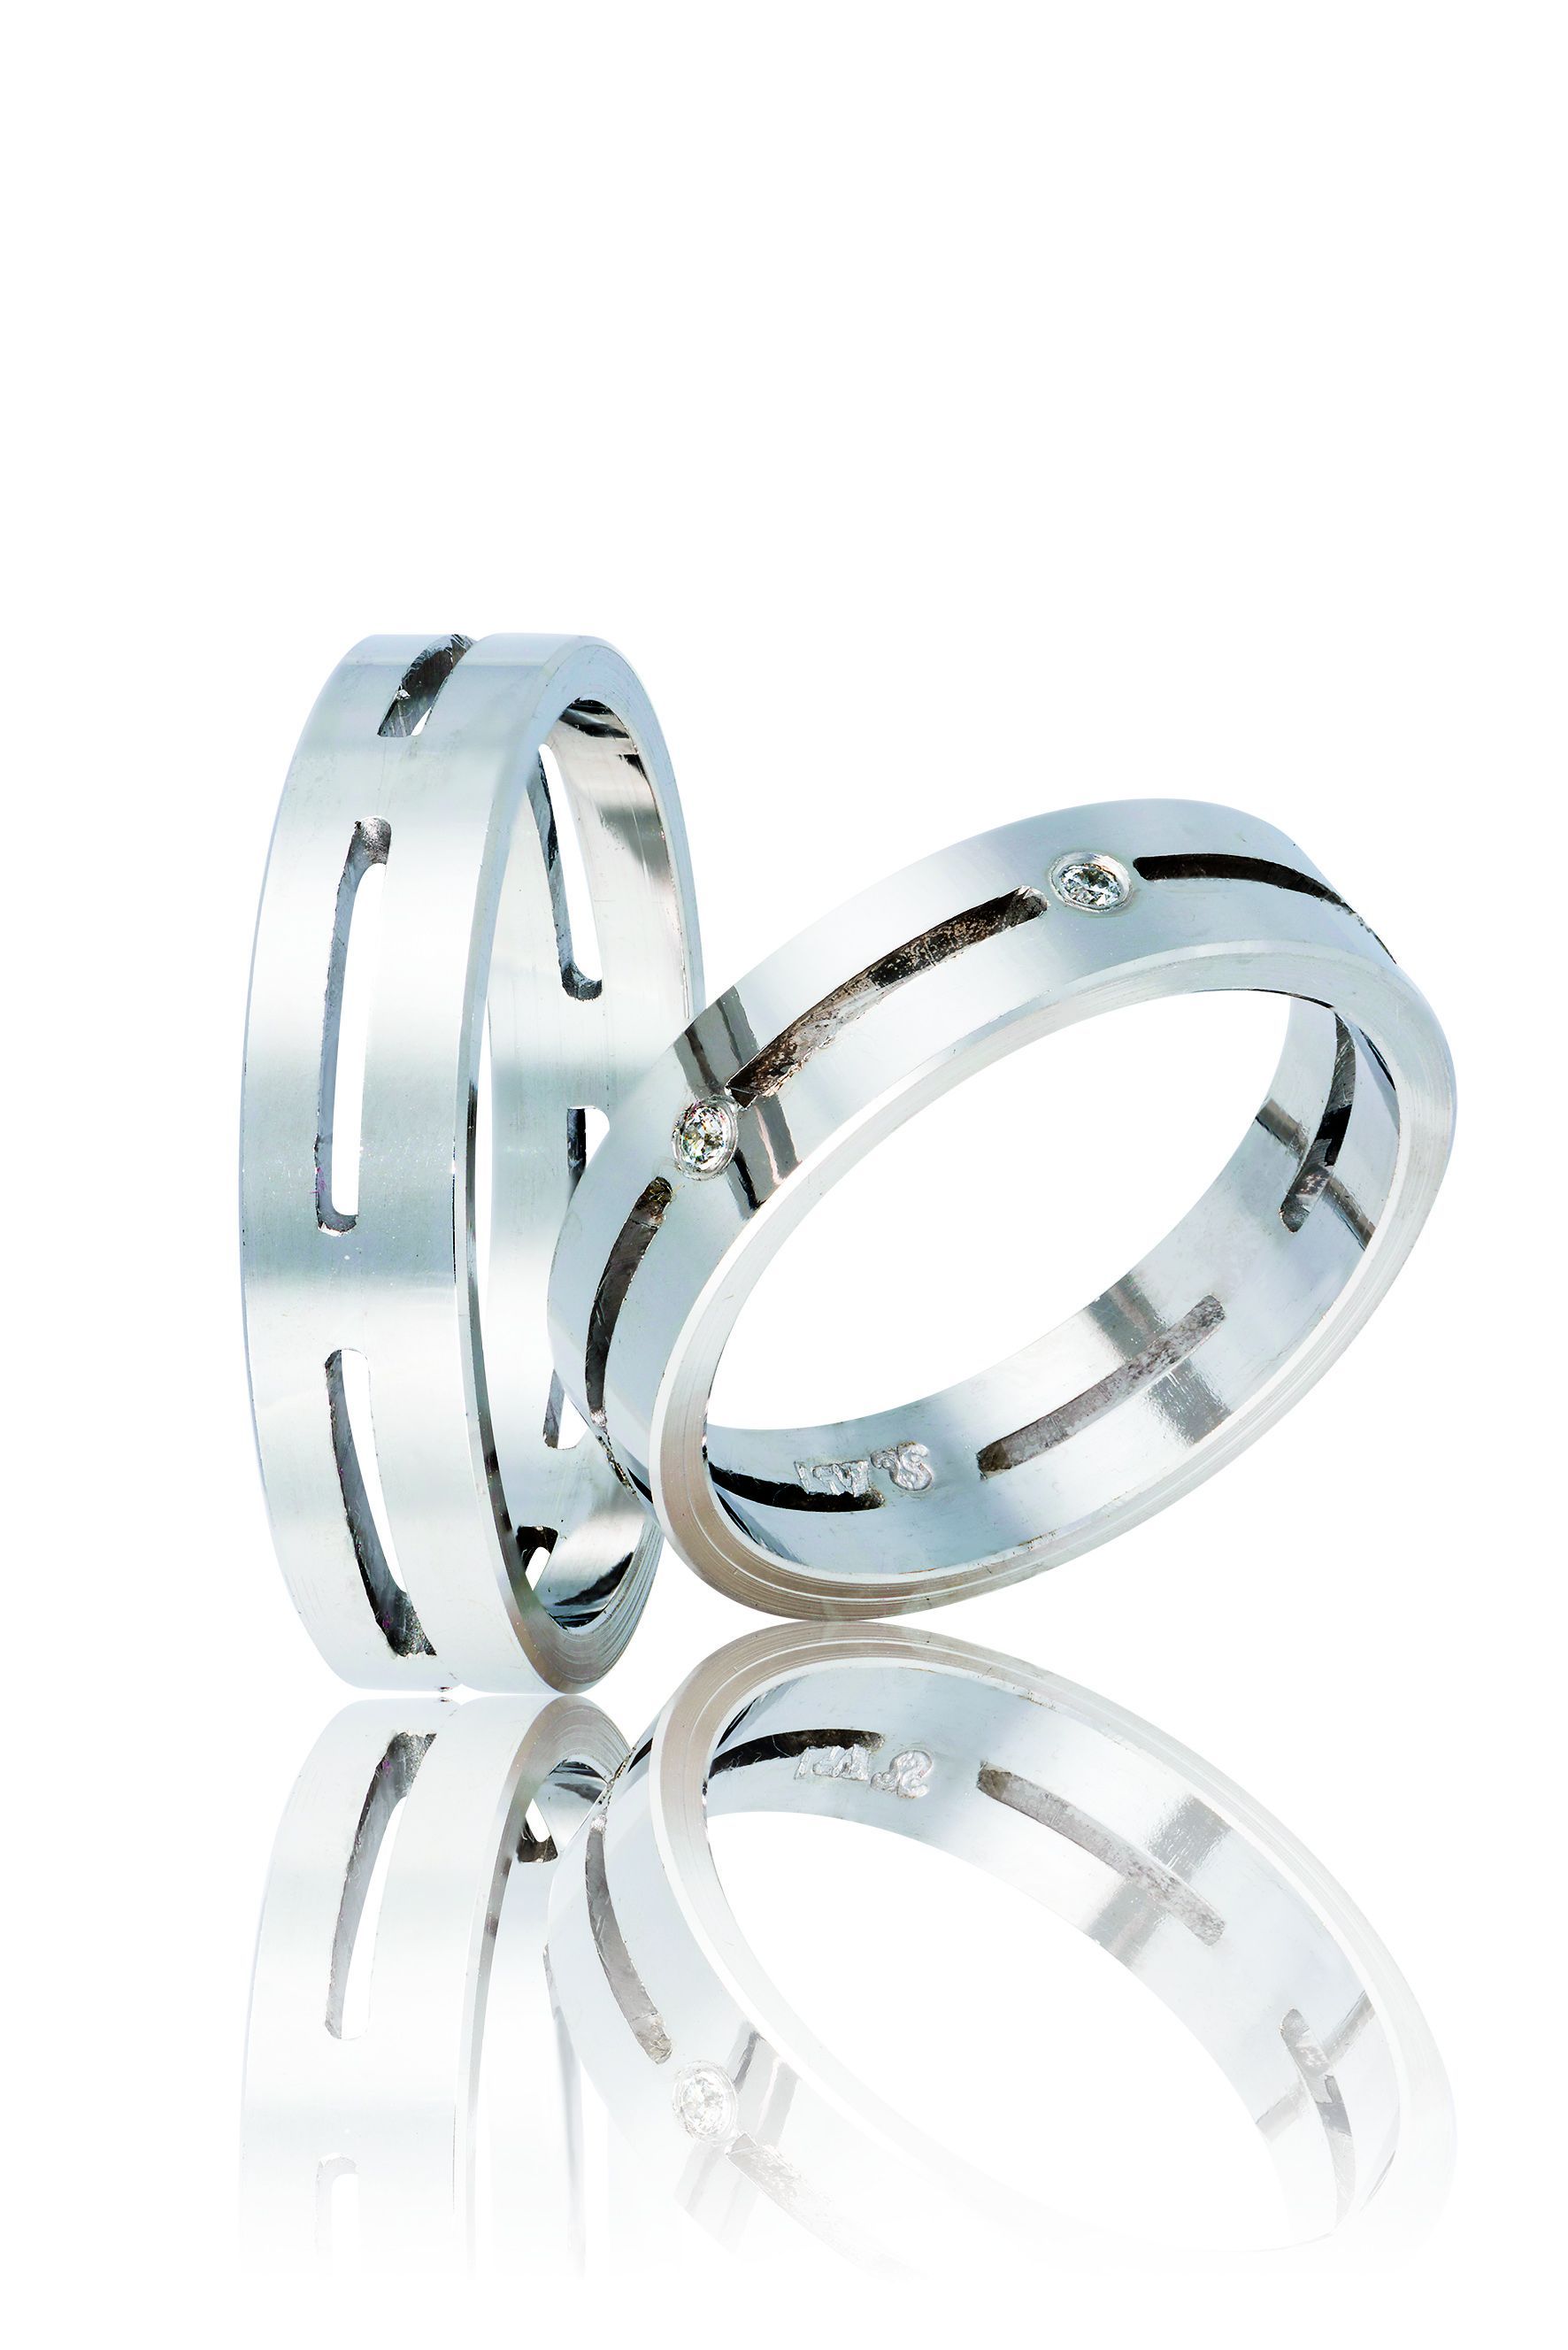 White gold wedding rings 5mm (code 4w)